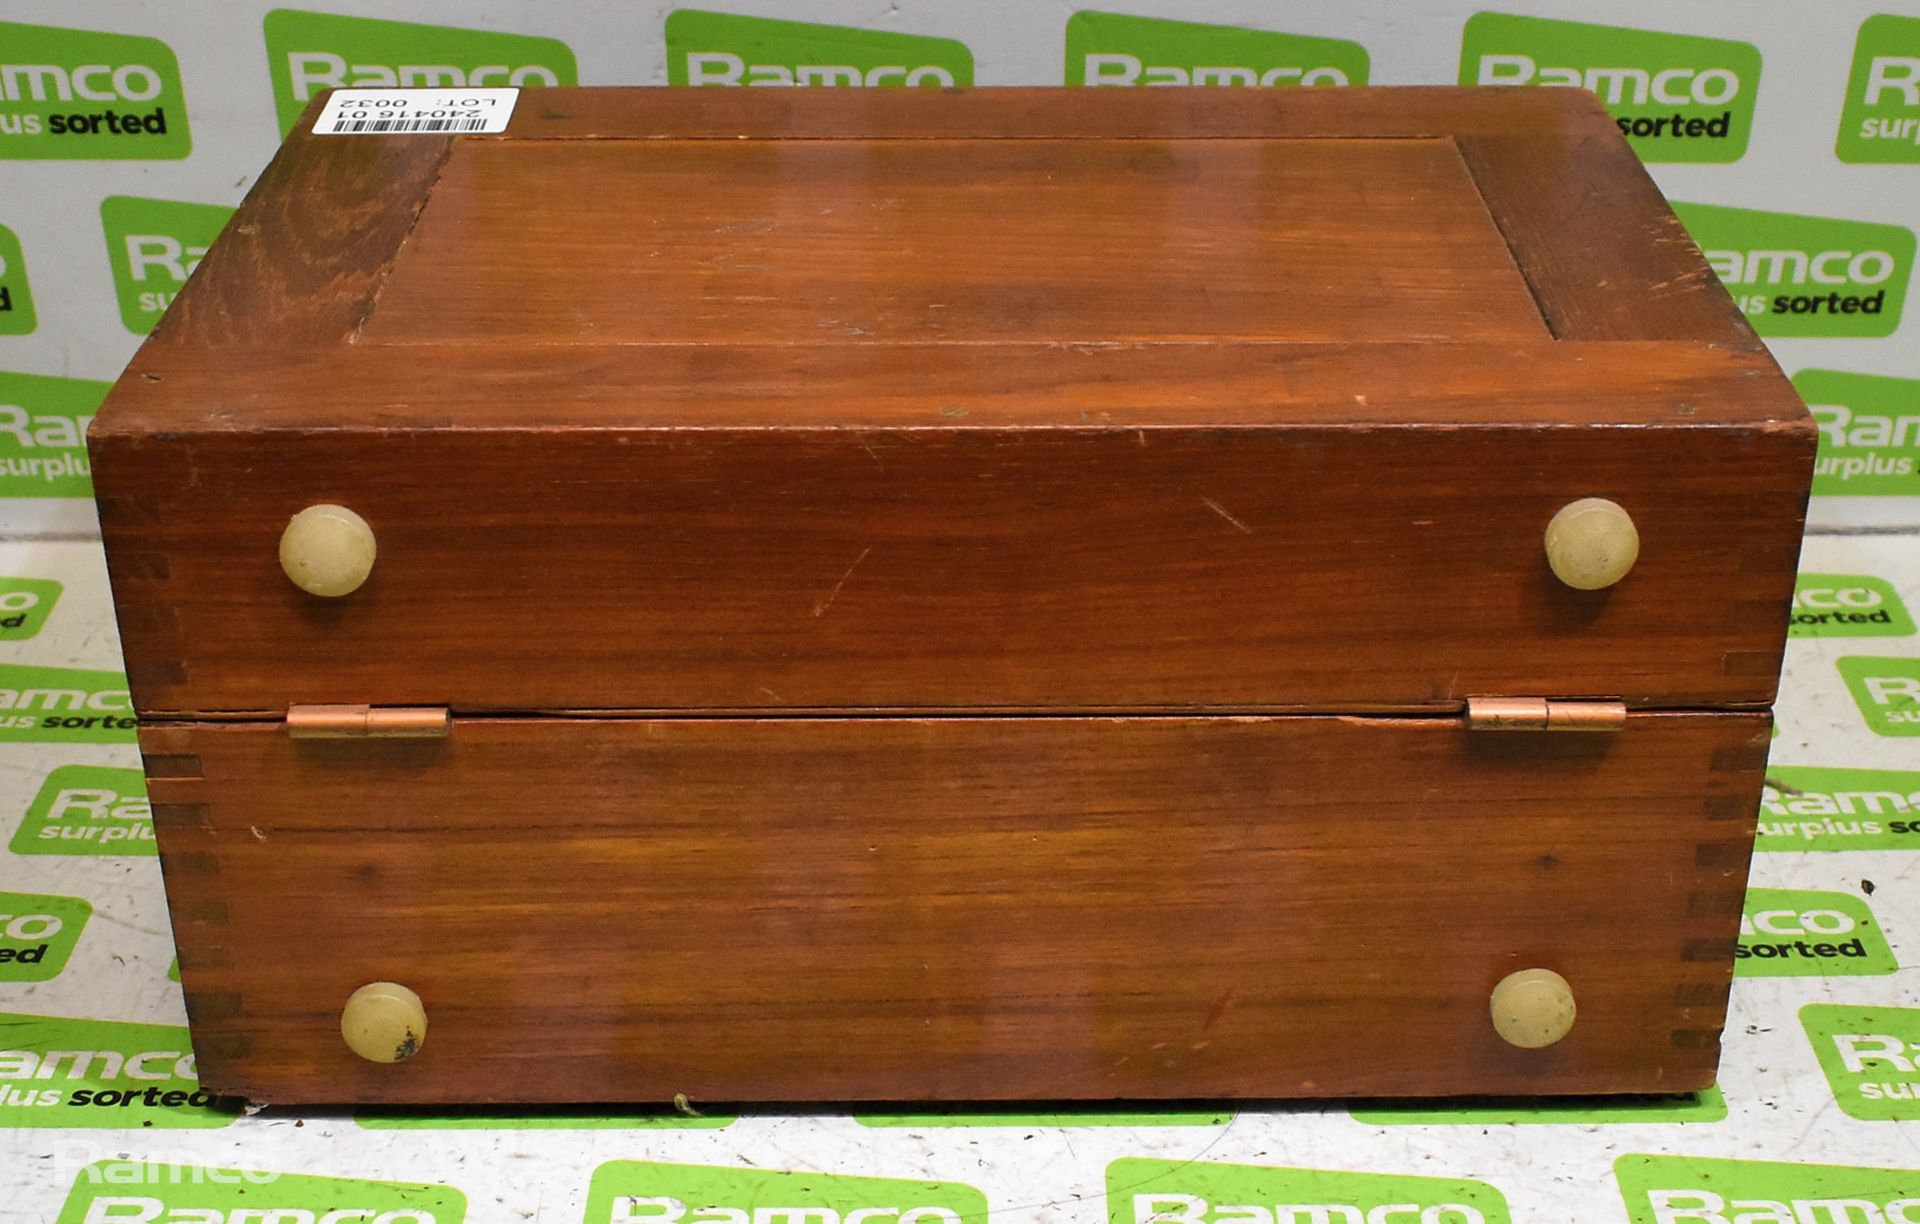 Cambridge Type 24488 portable potentiometer in wooden box - Image 5 of 11